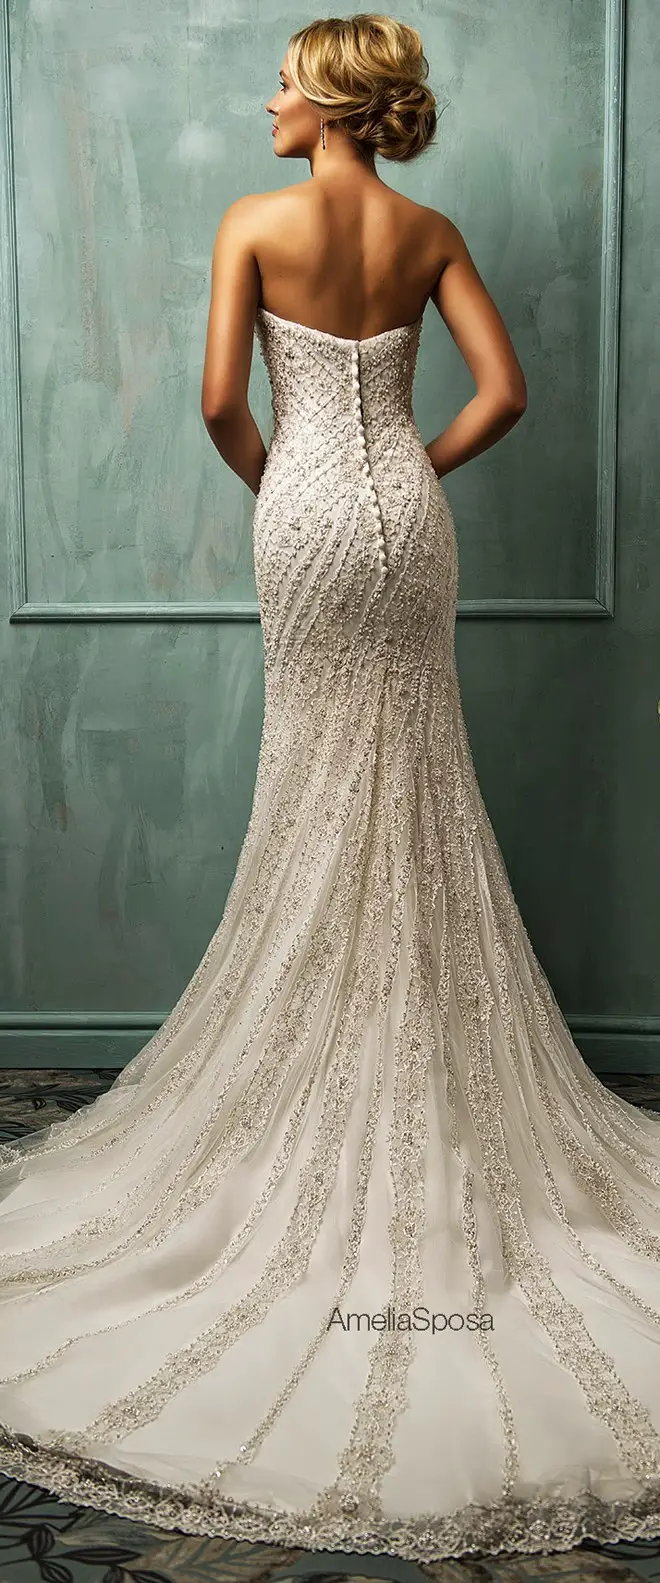 Best Wedding Dresses of 2014 - Amelia Sposa